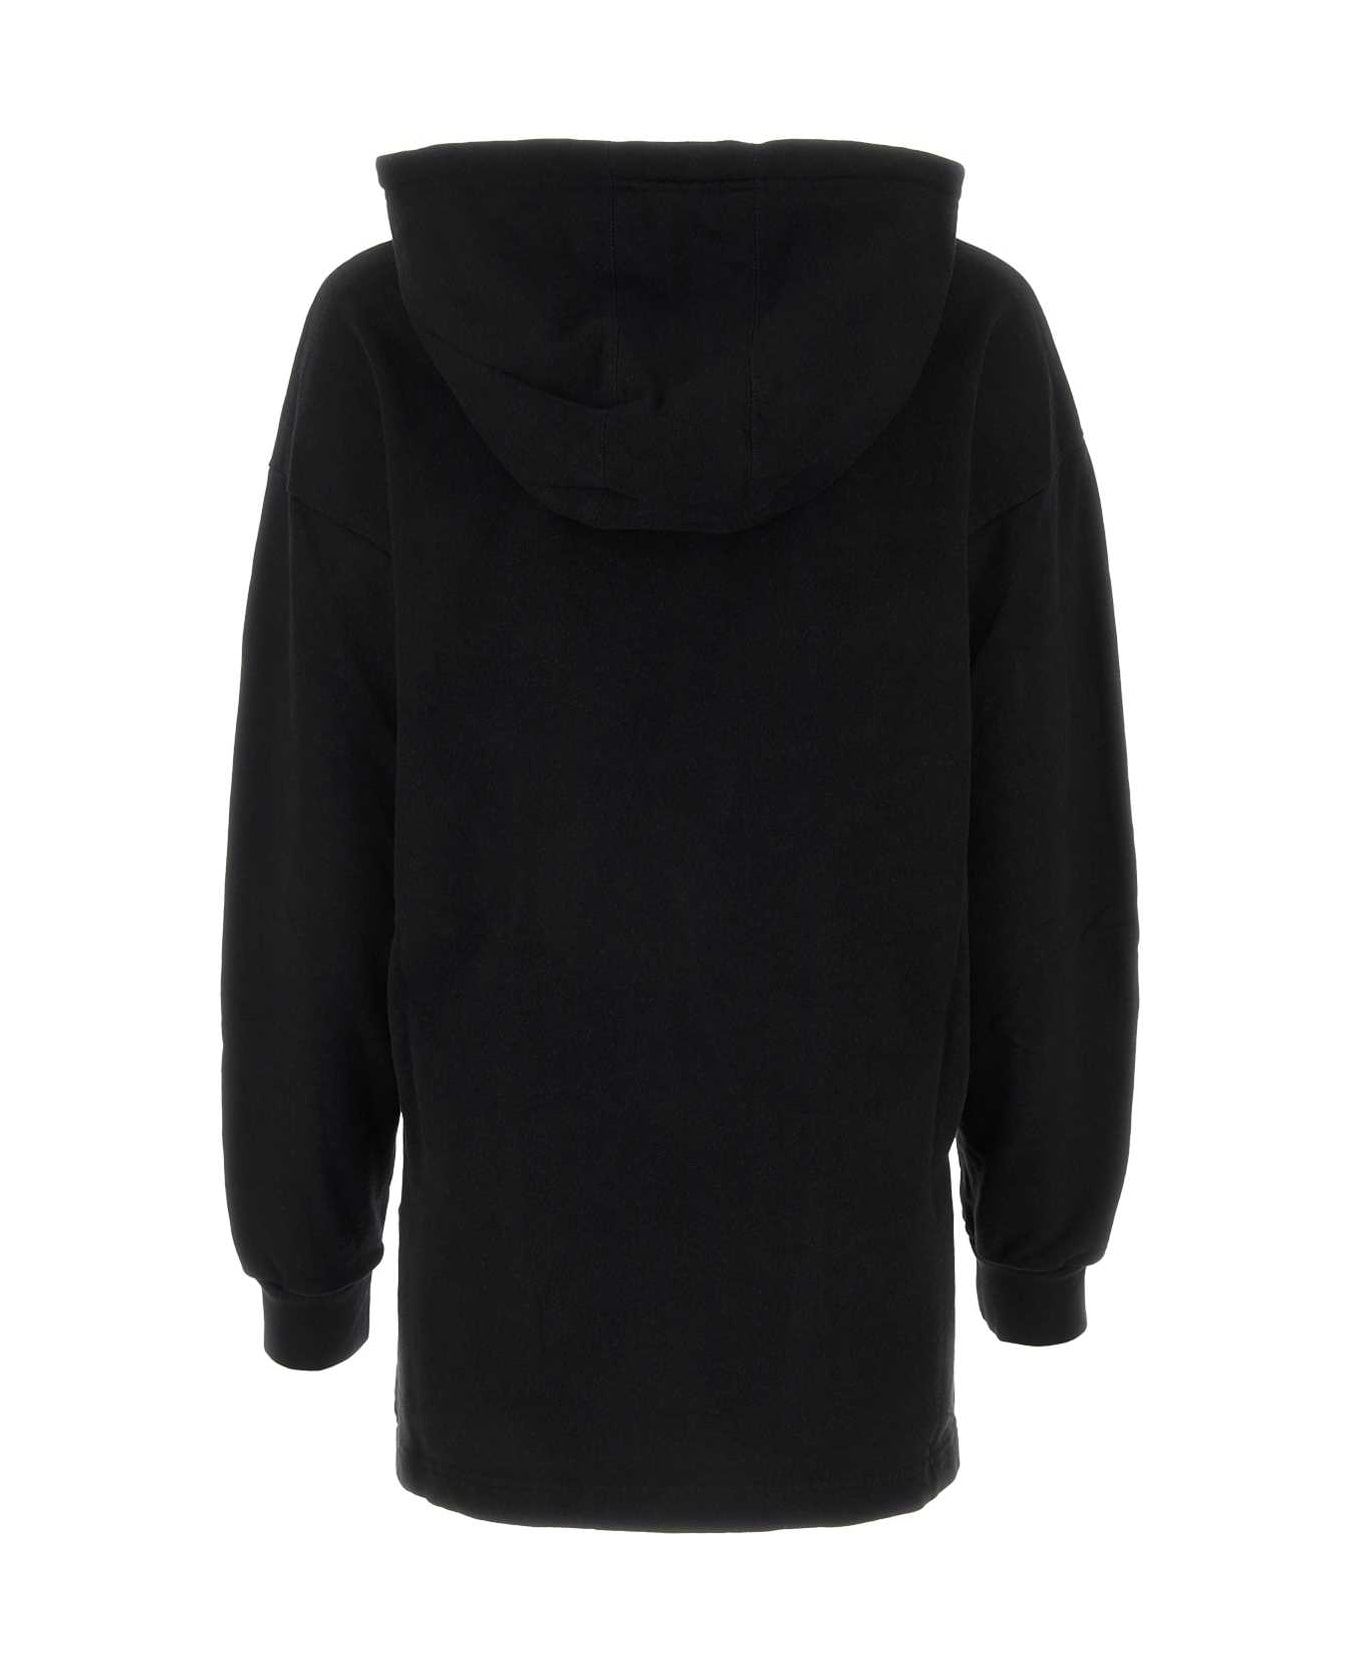 Marant Étoile Black Cotton Blend Marly Sweatshirt - Black